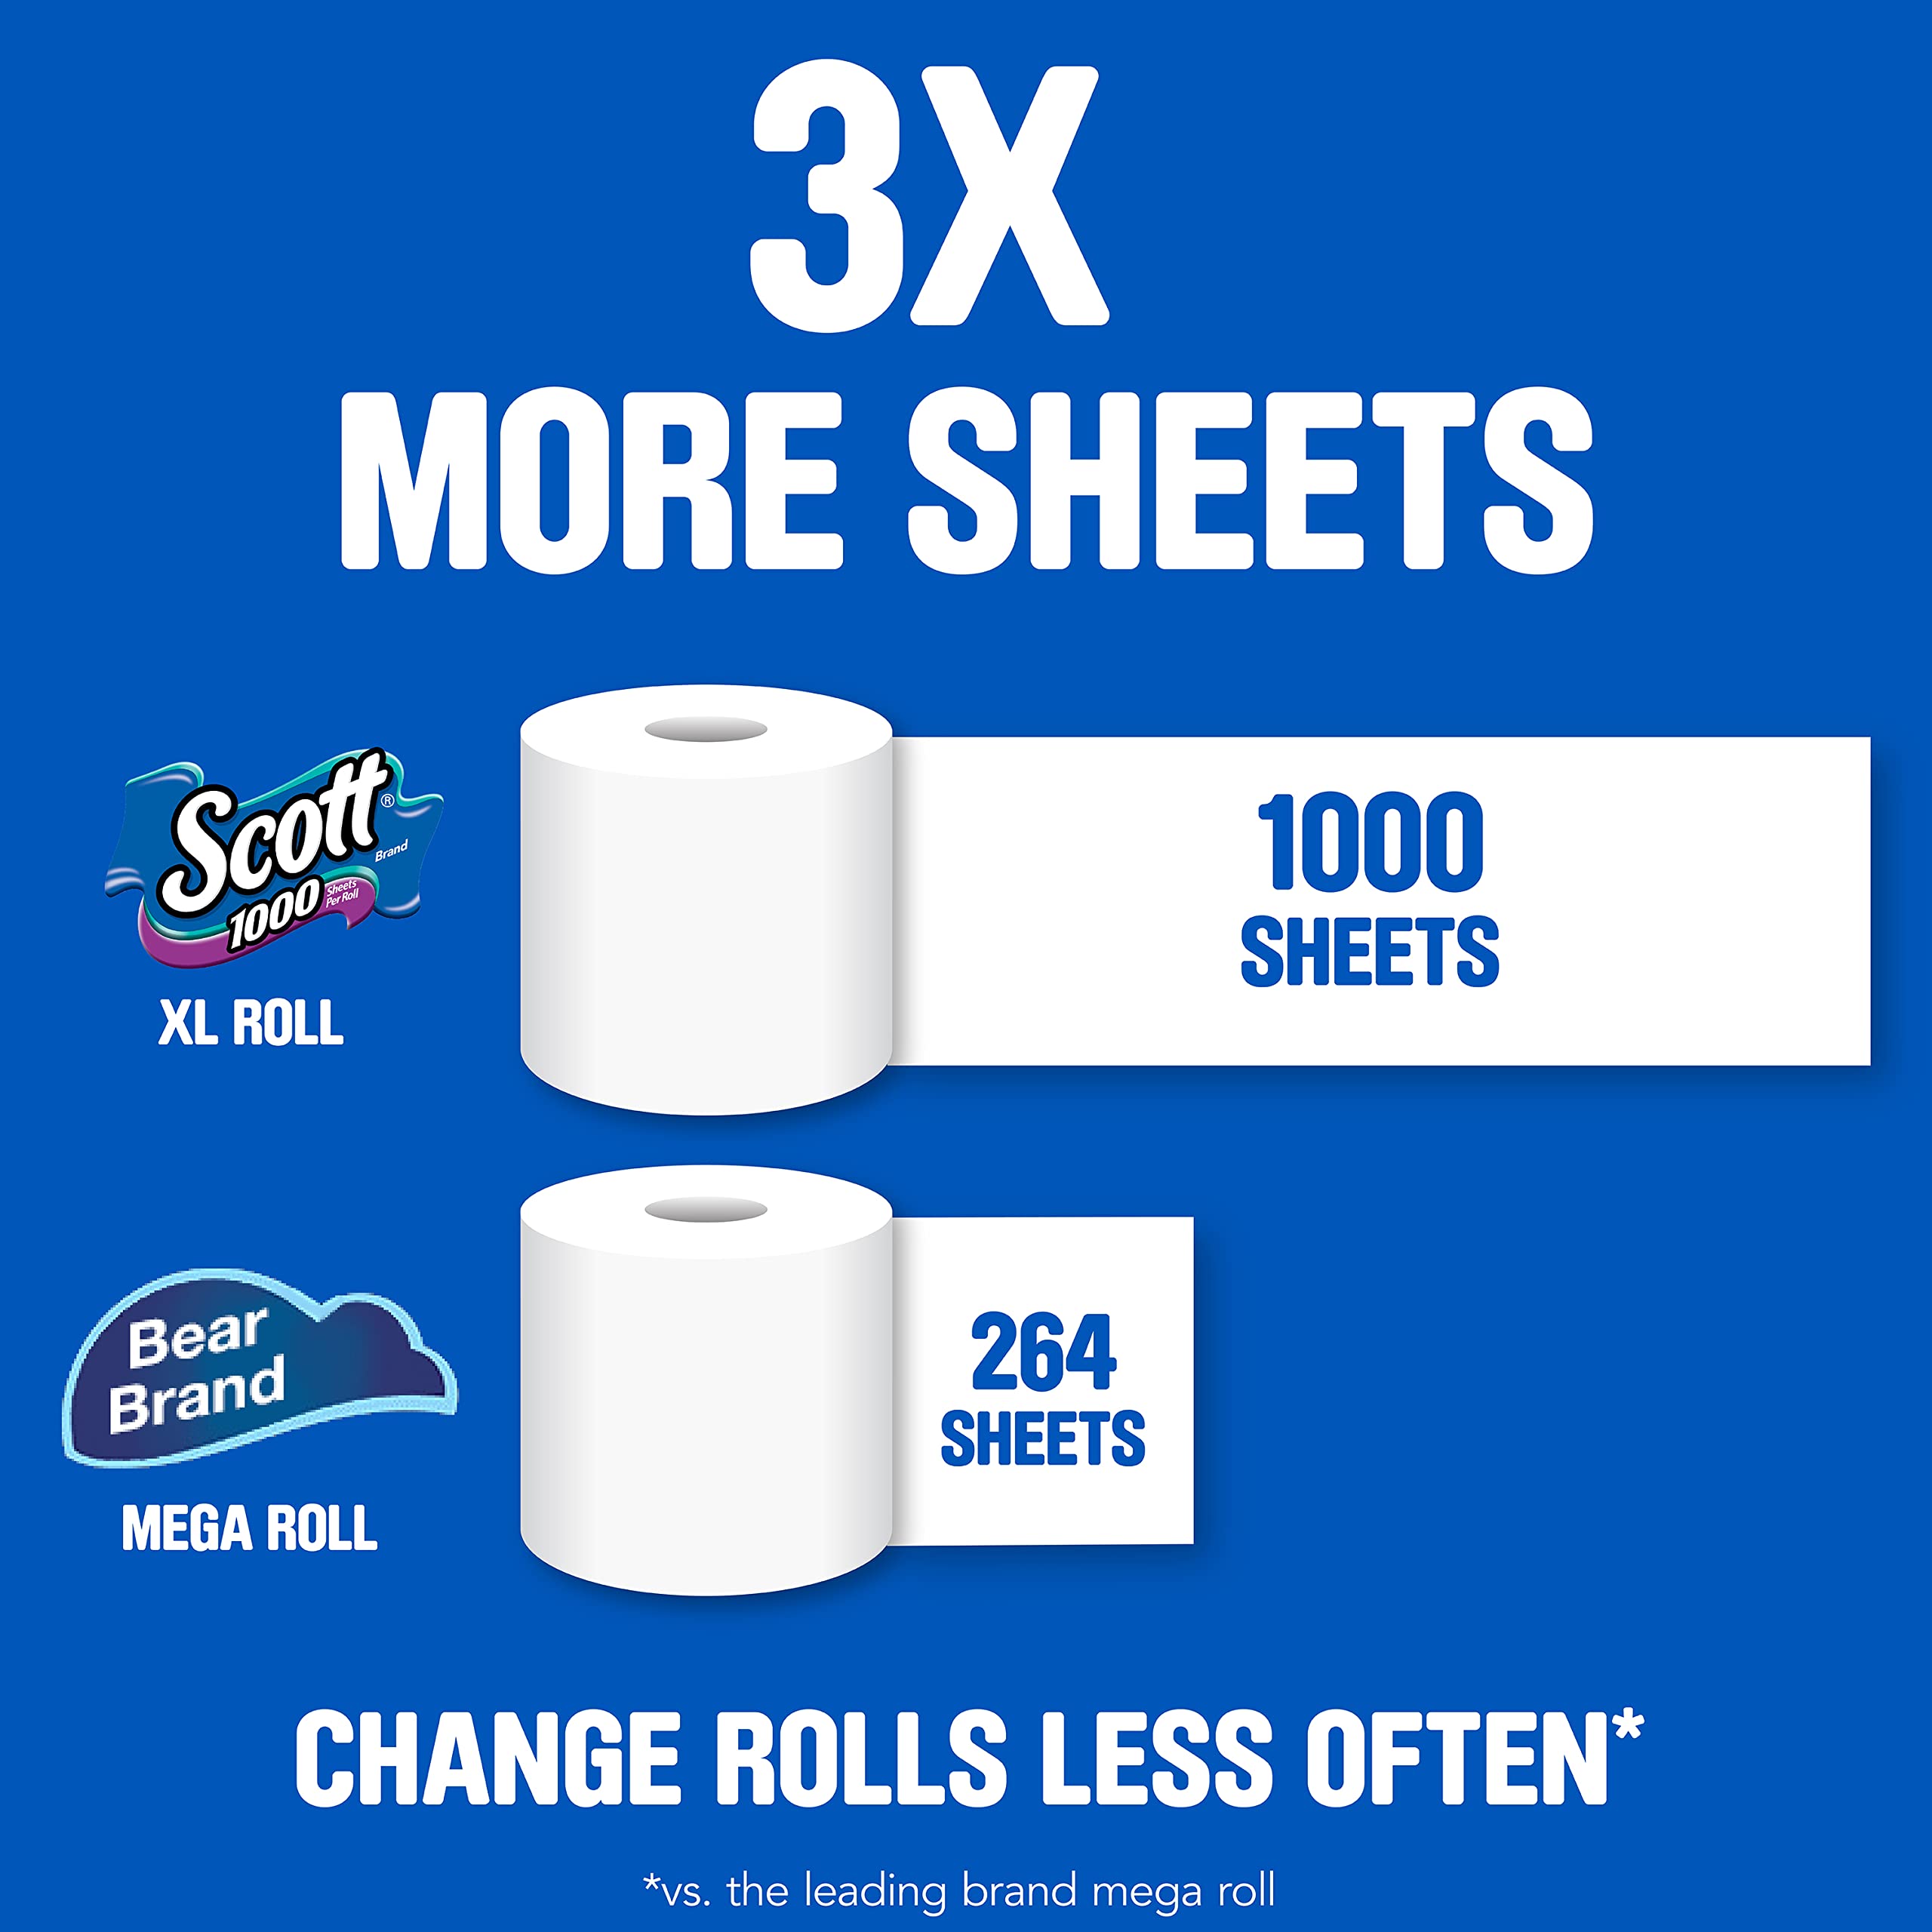 Scott 1000, Toilet Paper, 8 Rolls